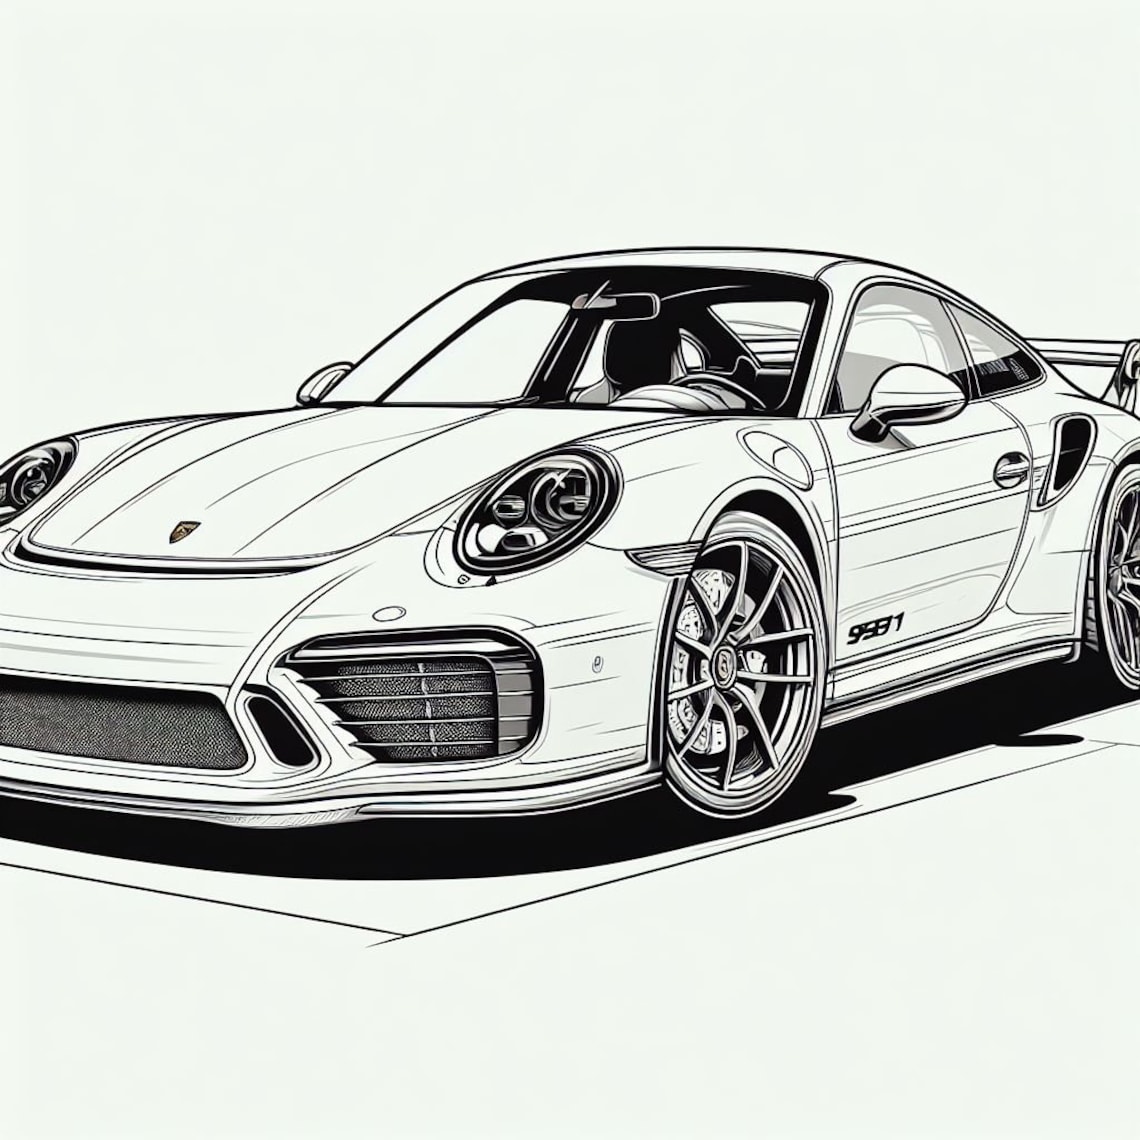 Porsche 911 20 Coloring Pages - Etsy